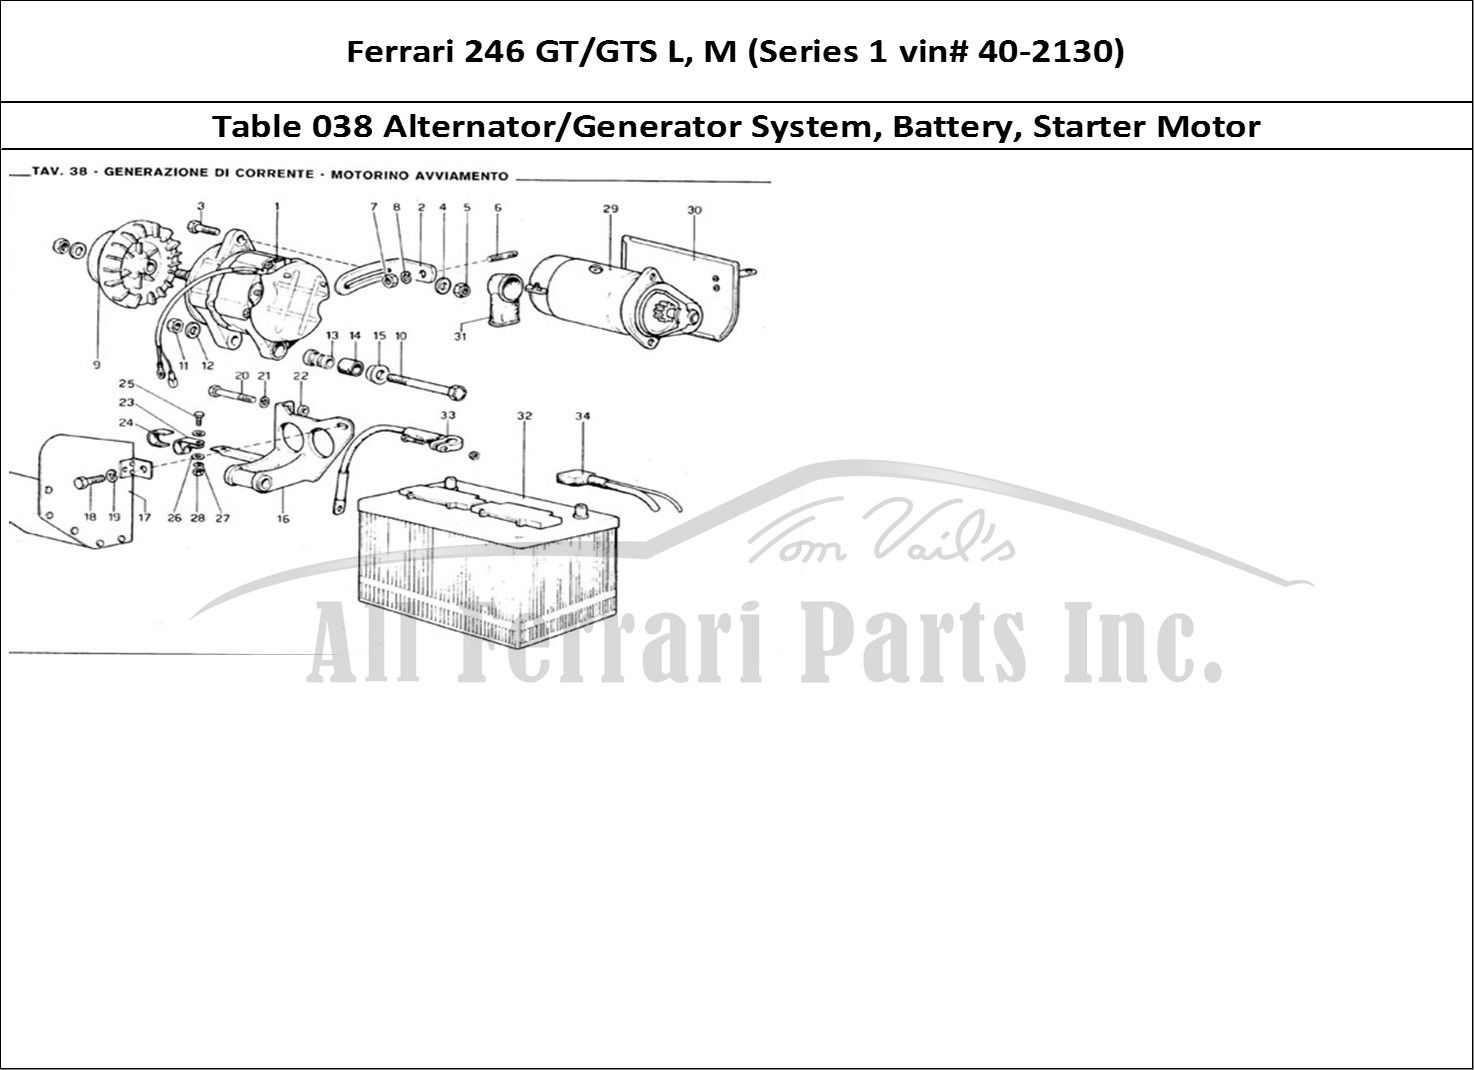 Ferrari Parts Ferrari 246 GT Series 1 Page 038 Current Generating System